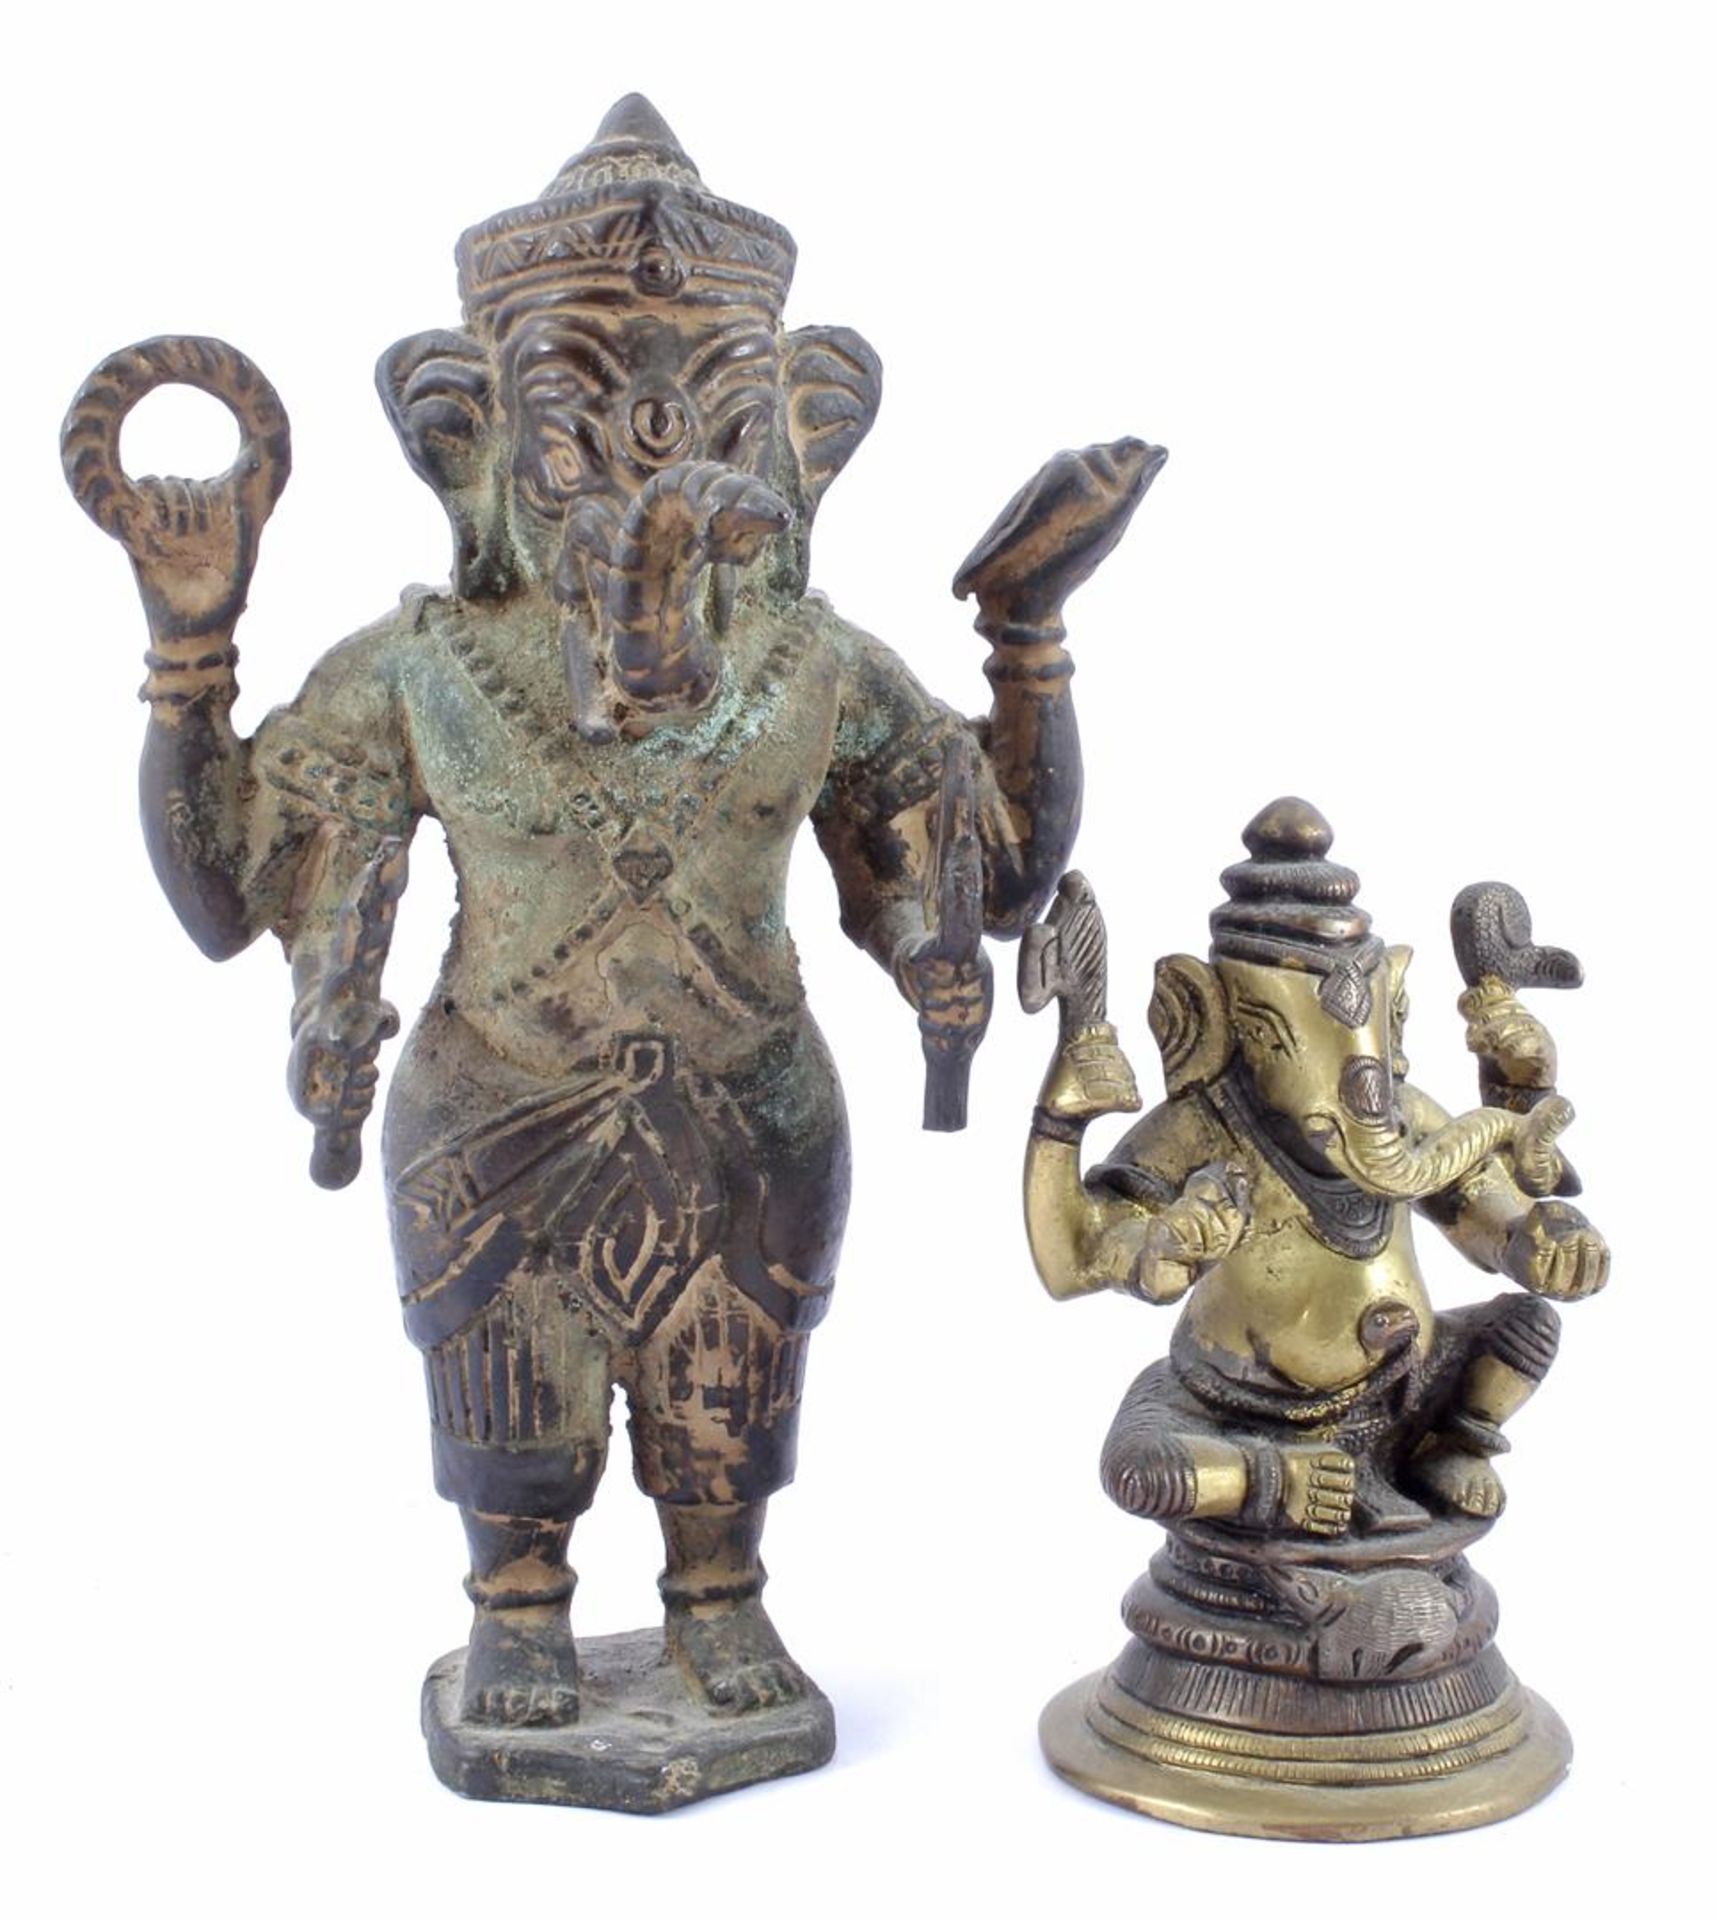 2 bronze Ganesha statues 12 cm and 20.5 cm high